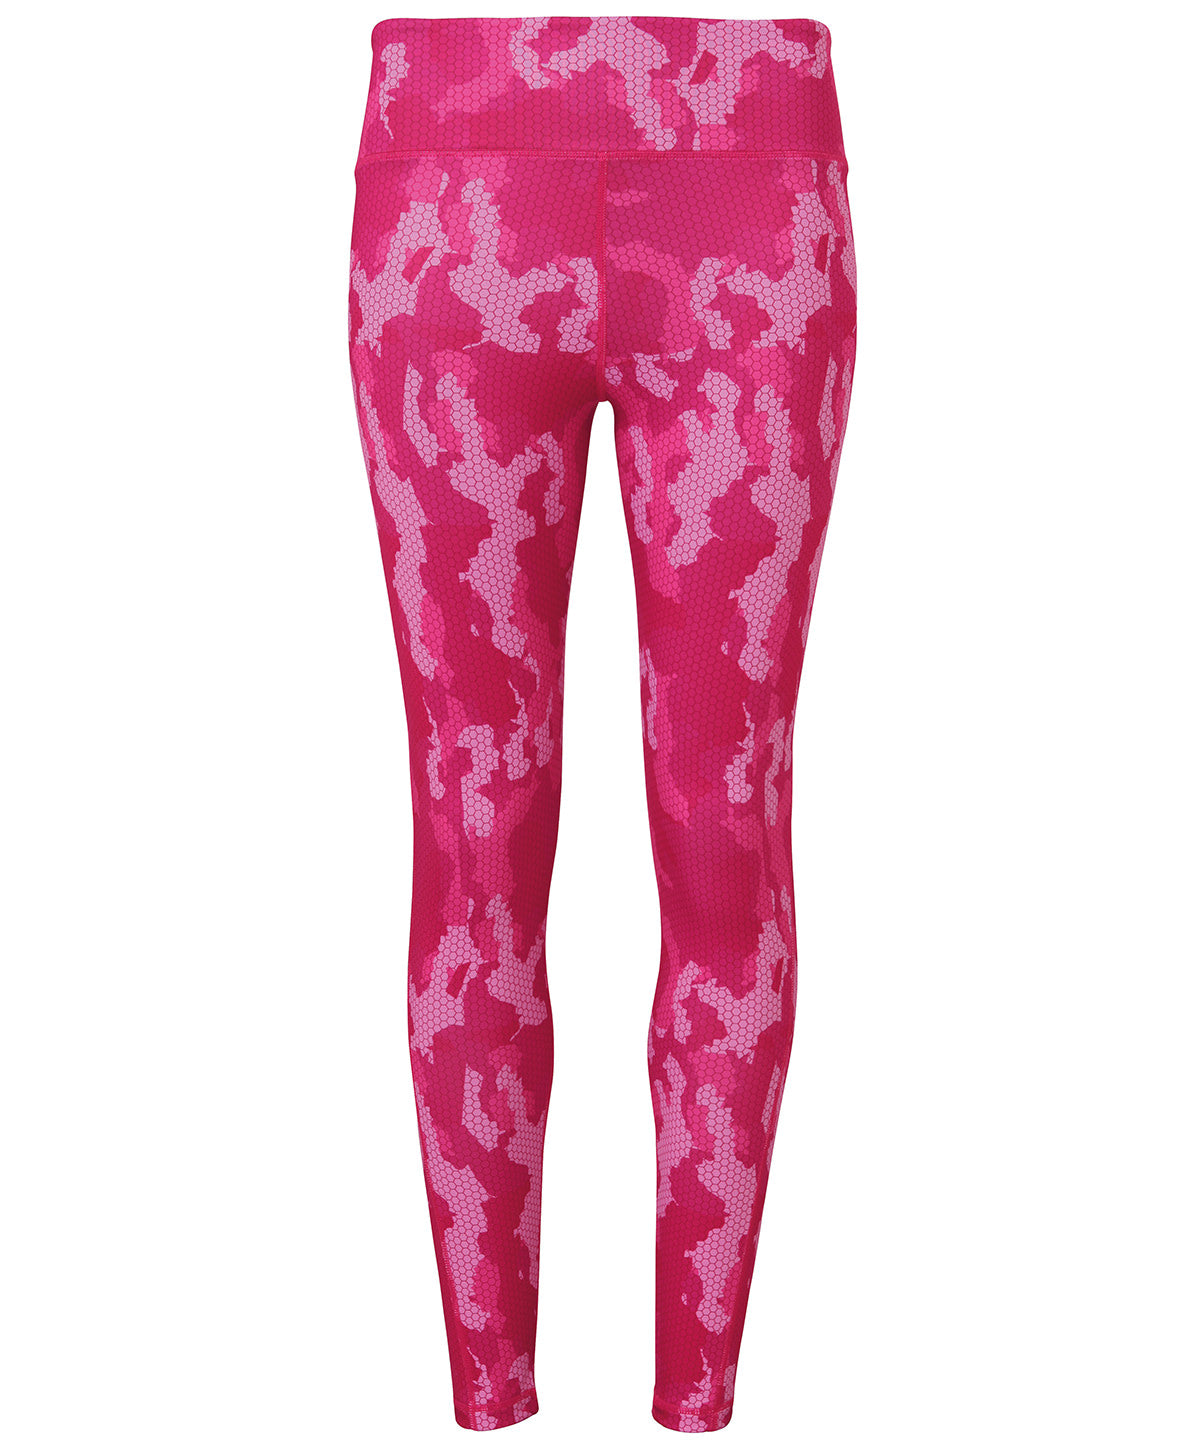 Camo Hot Pink - Women's TriDri® performance Hexoflage® leggings